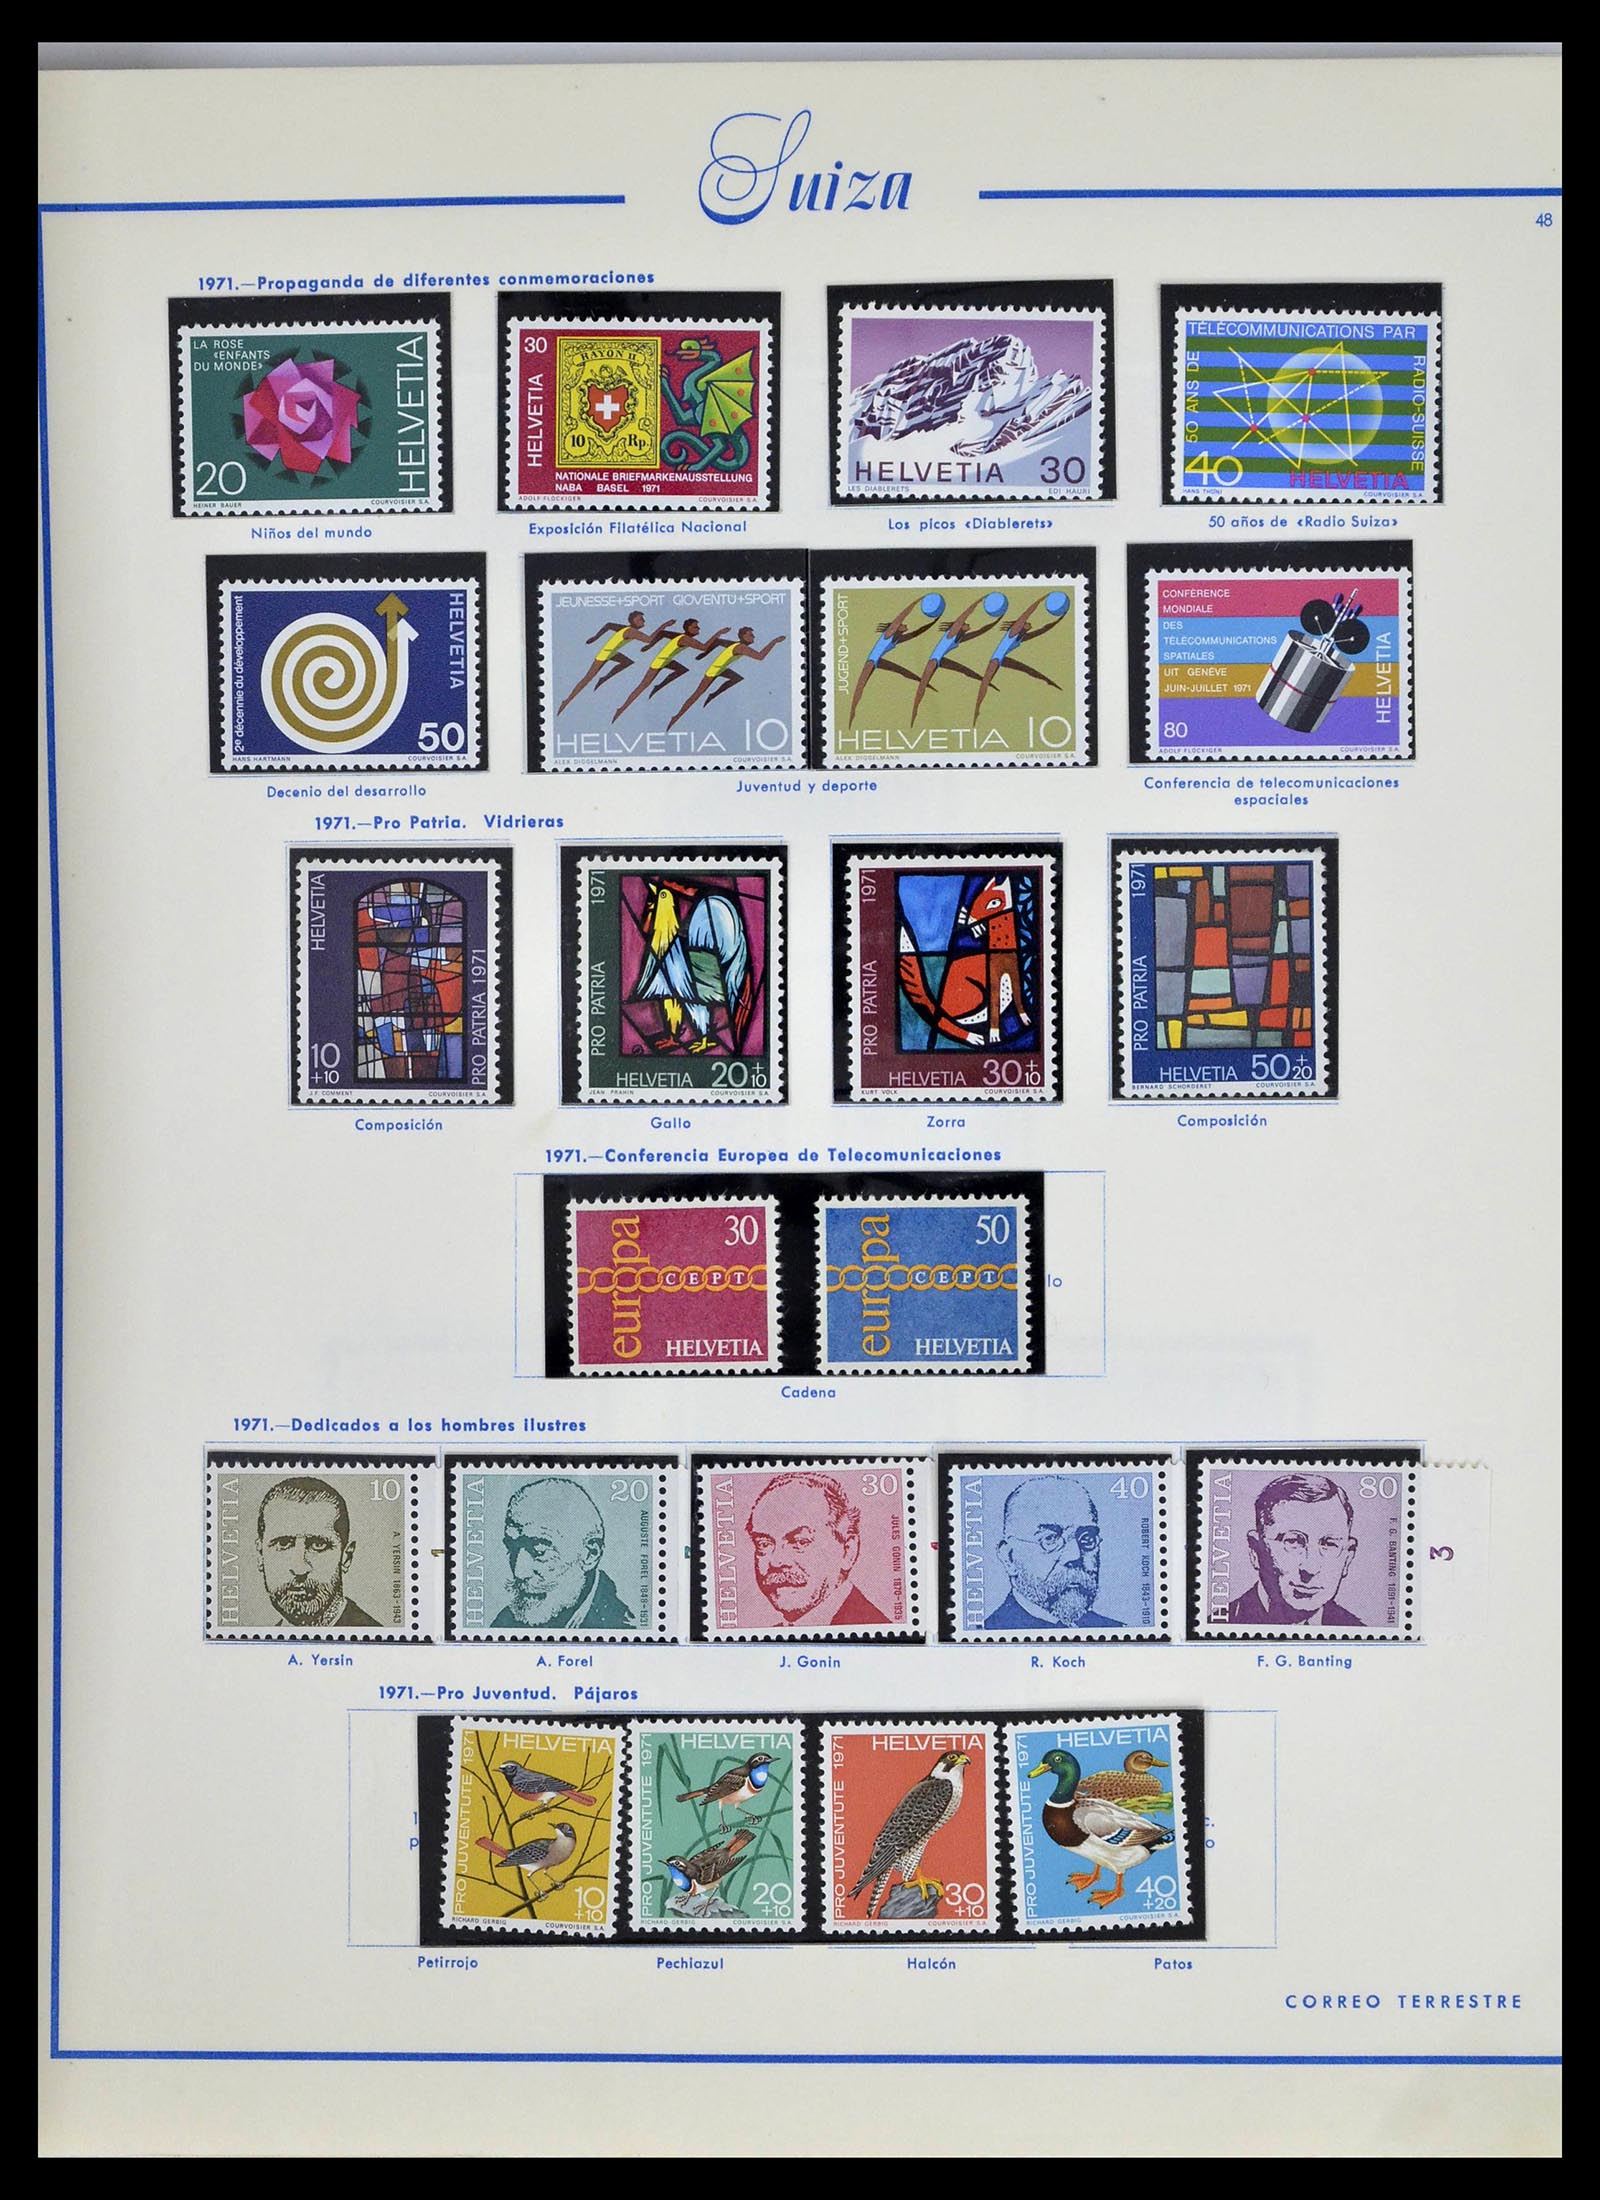 39217 0053 - Stamp collection 39217 Switzerland 1850-1986.